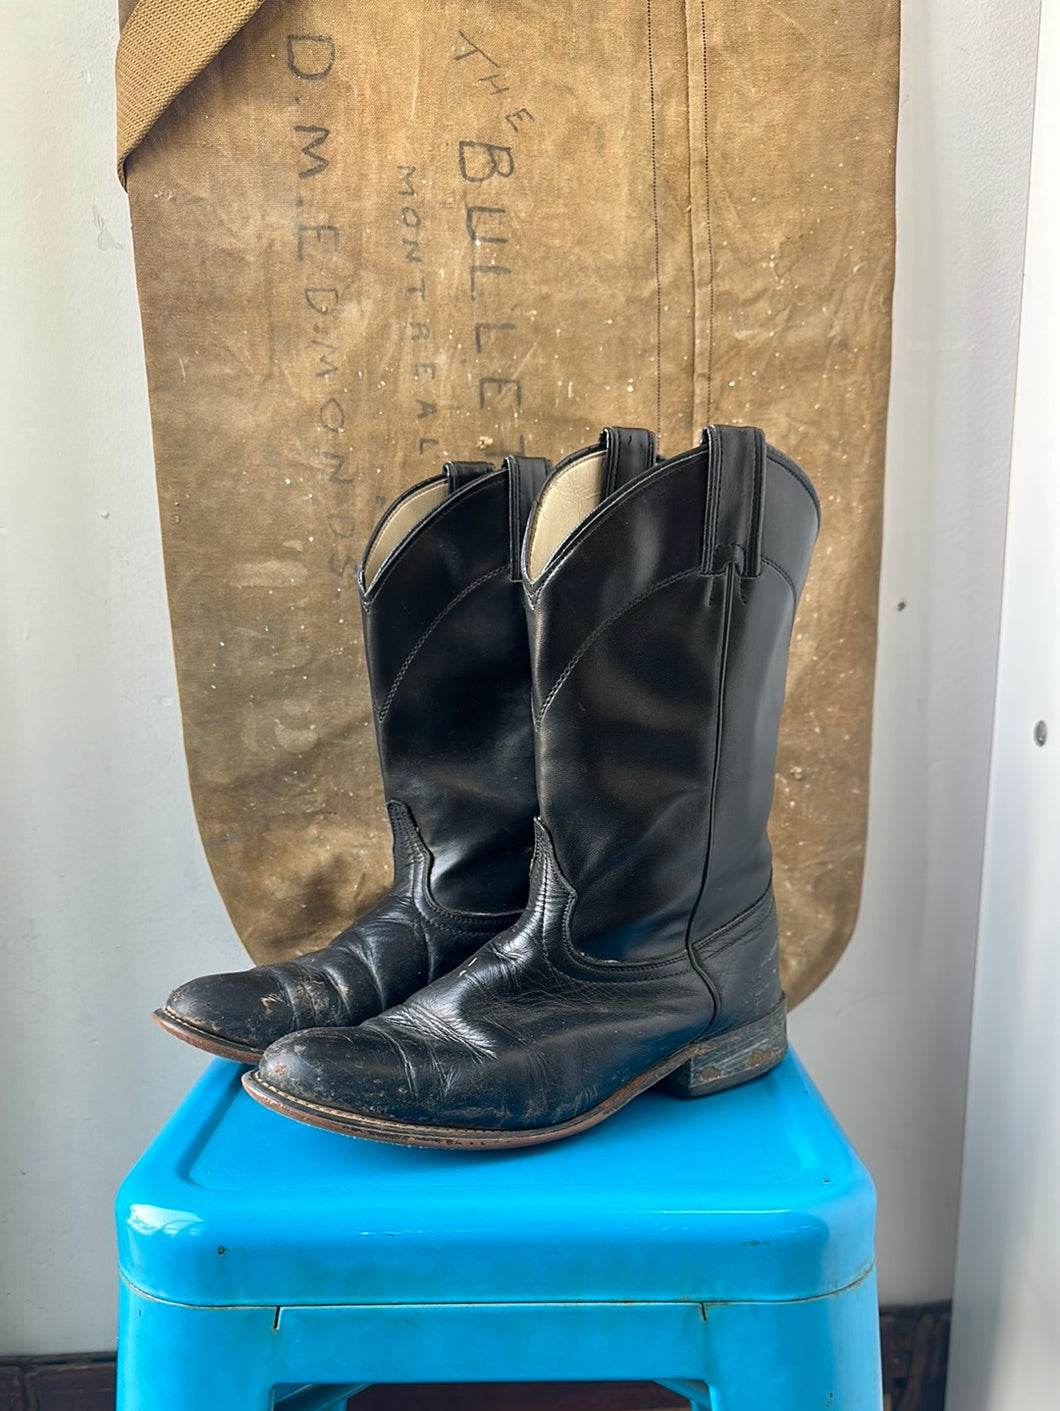 Laredo Roper Boots - Black - Size 7 M 8.5 W